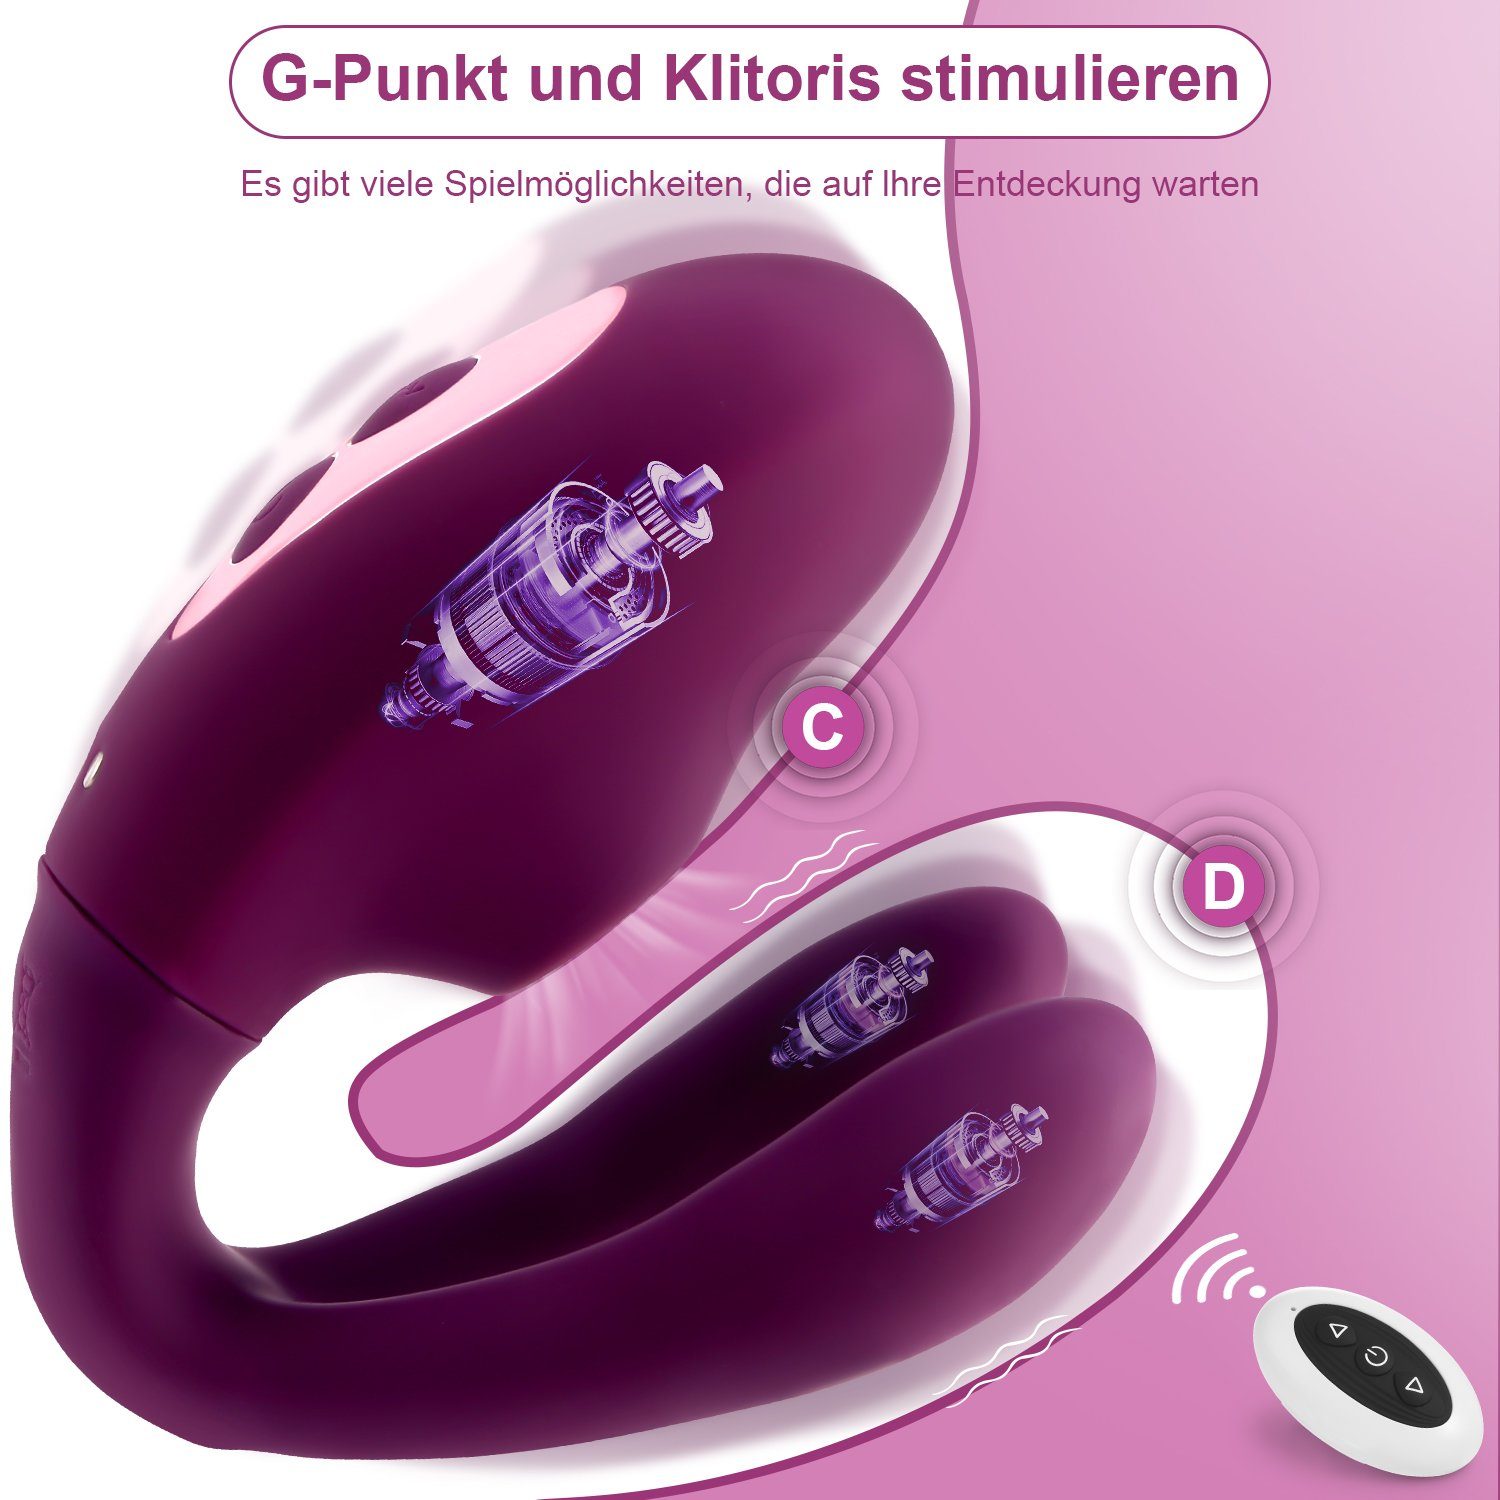 1 LETGOSPT Klitoris Spielzeug Paar-Vibrator Sex 10 Vibratoren Mit Saugenmodi & Klitoris die IN Sauger Paare 3 Frau Erotisches für 10 Vibrationsmodi, Vibrator,